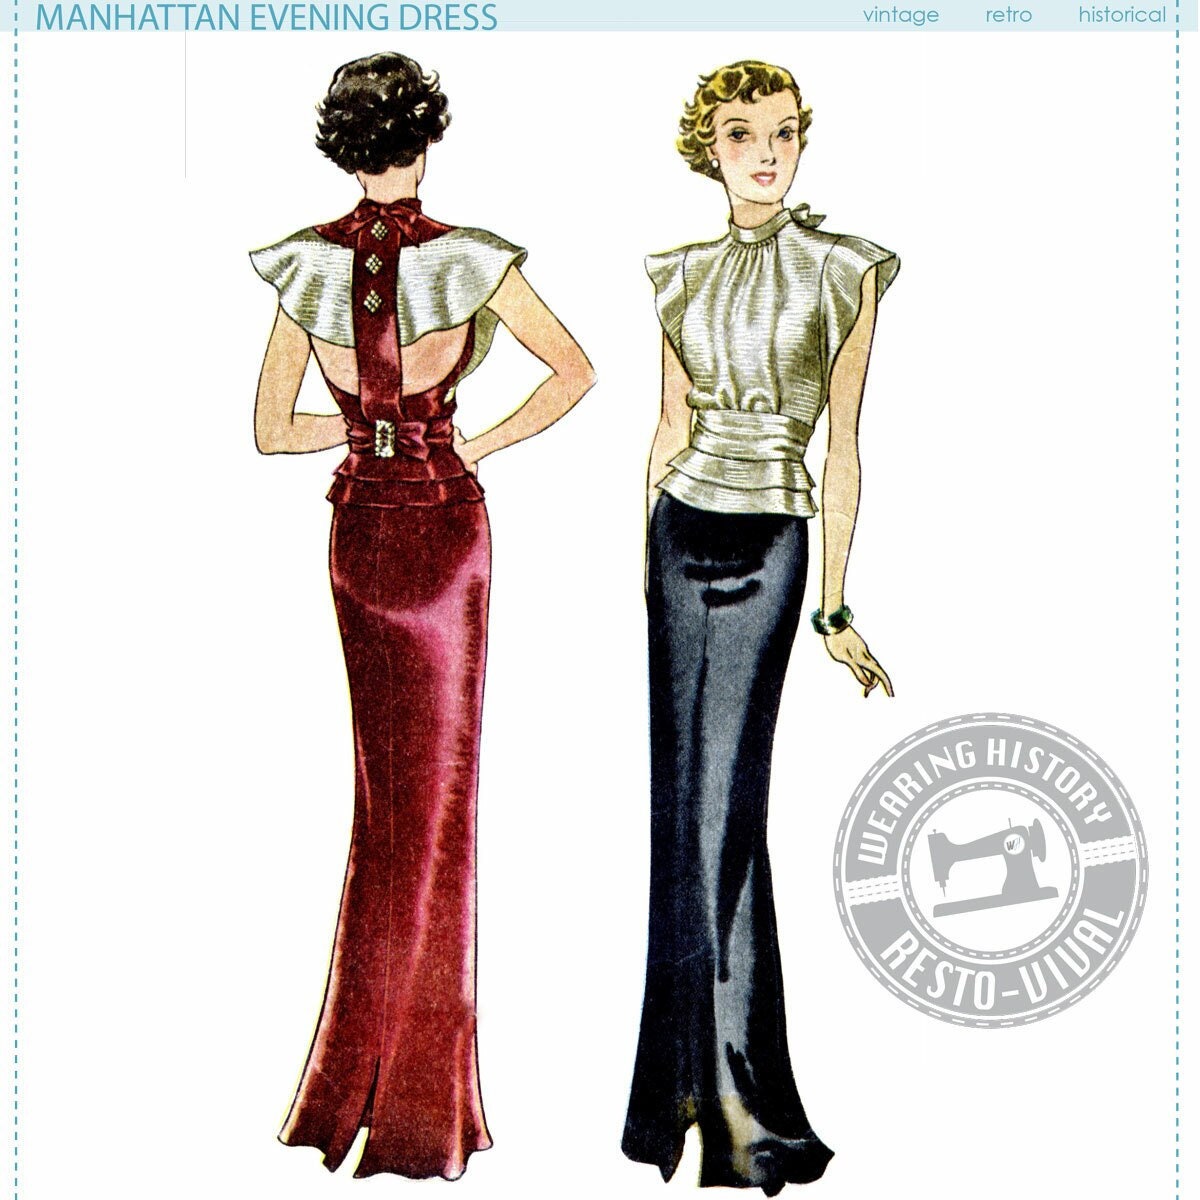 PRINTED PATTERN- 1930s Manhattan Evening Dress Pattern- Wearing History